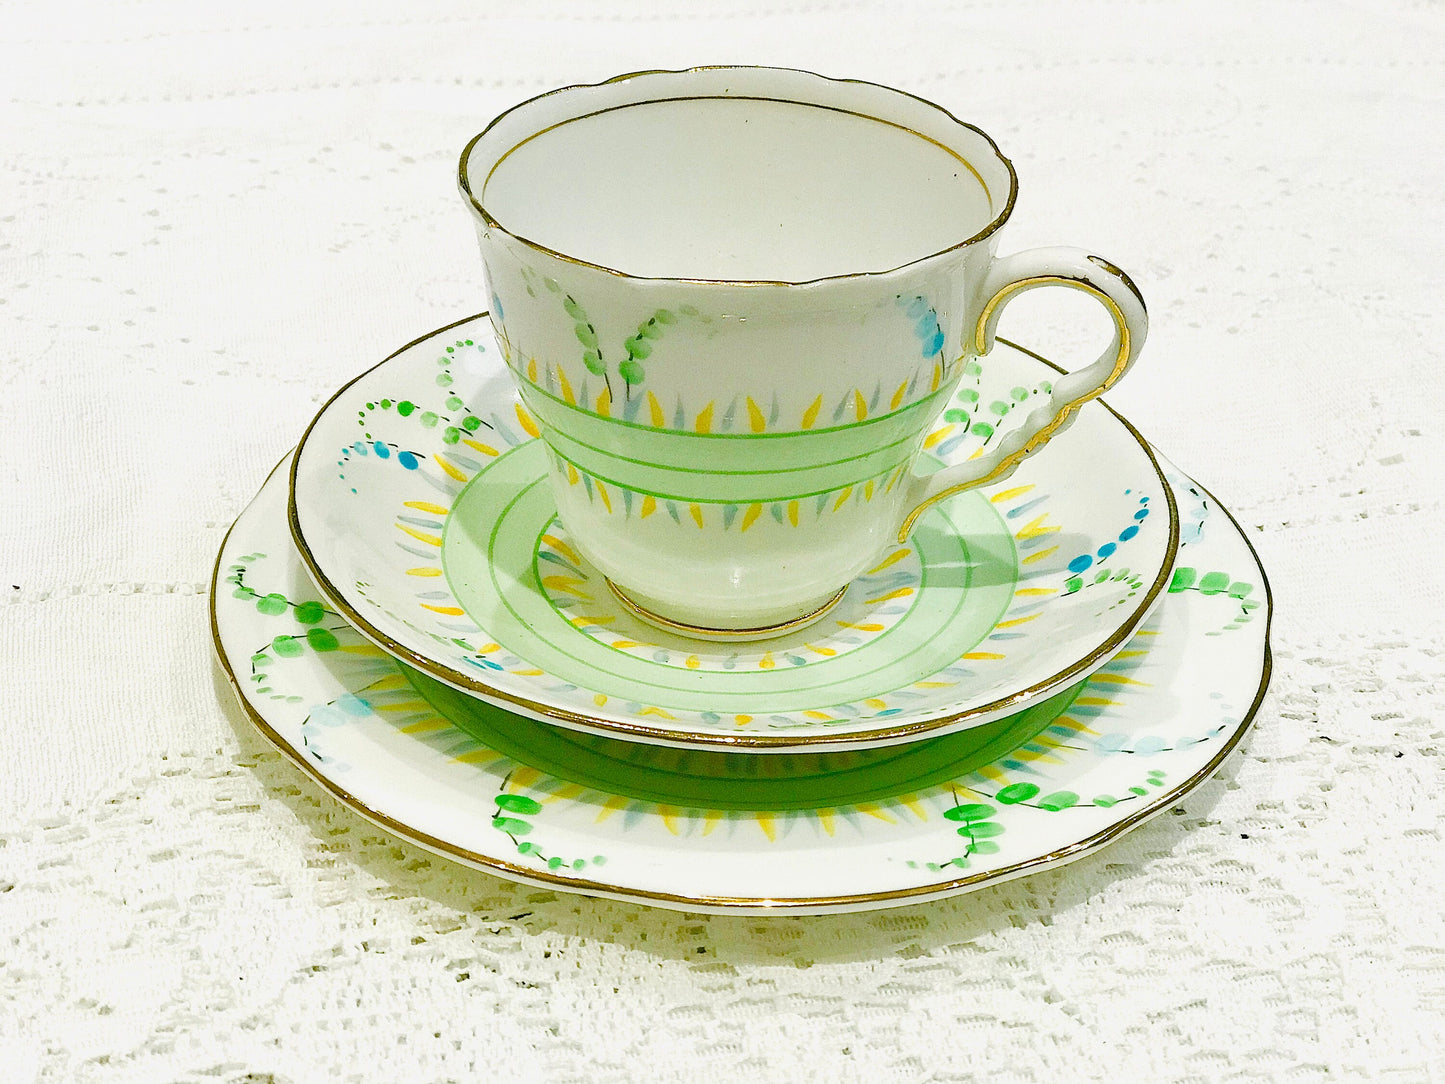 Royal Stafford Green Teacup Saucer set - English vintage afternoon tea china - green